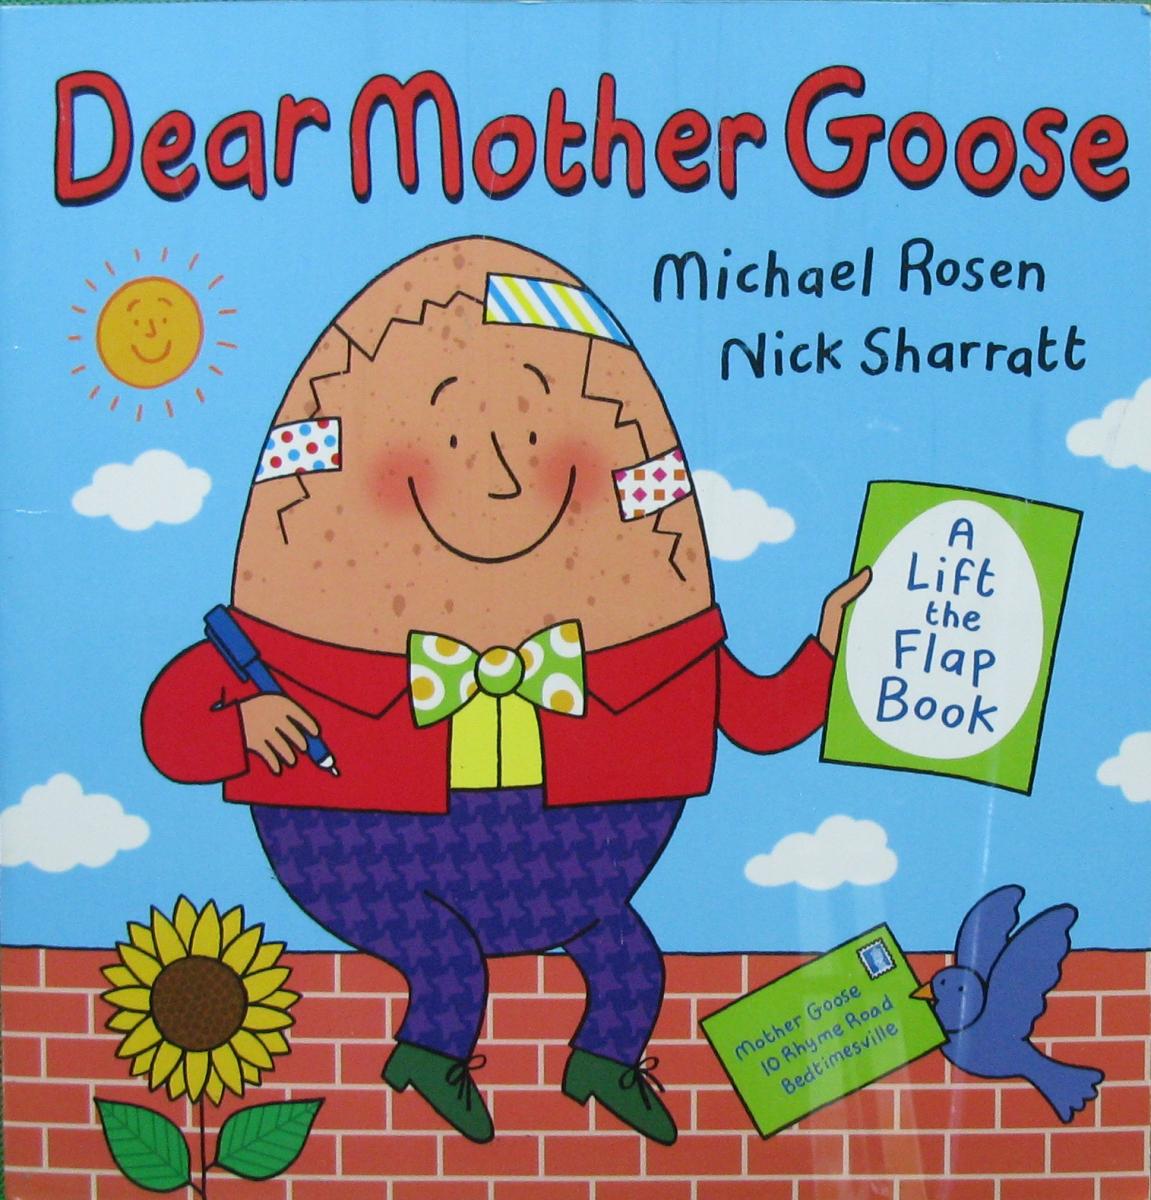 Dear mother. Michael Rosen книги. Dear mother Goose Michael Rosen Nick Sharatt. The Tales of mother Goose.